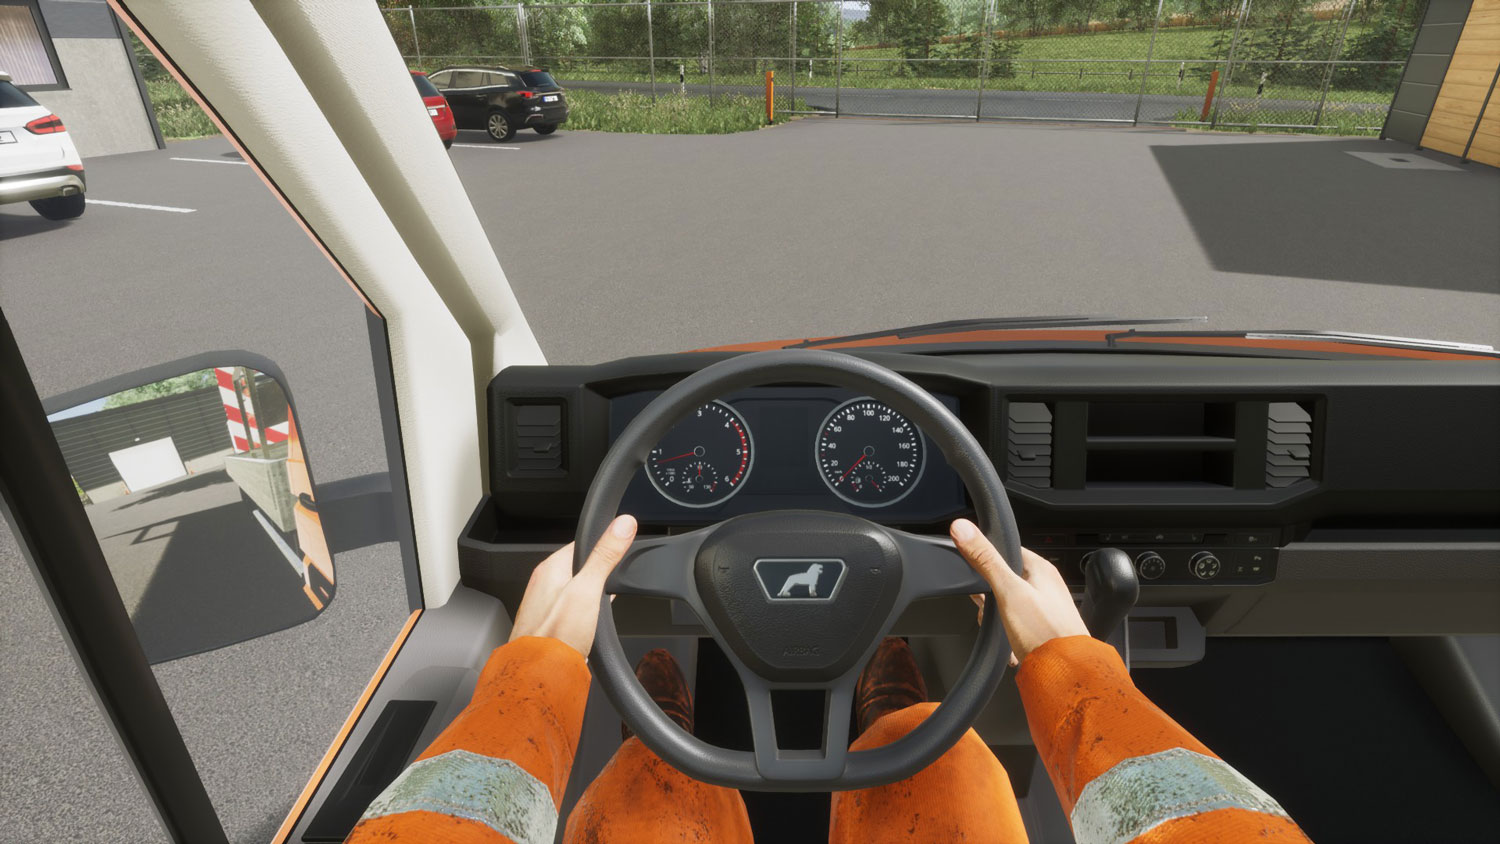 Aerosoft Truck Simulator - On the Road (Truck / LKW - Simulator) - [PC] :  : Games